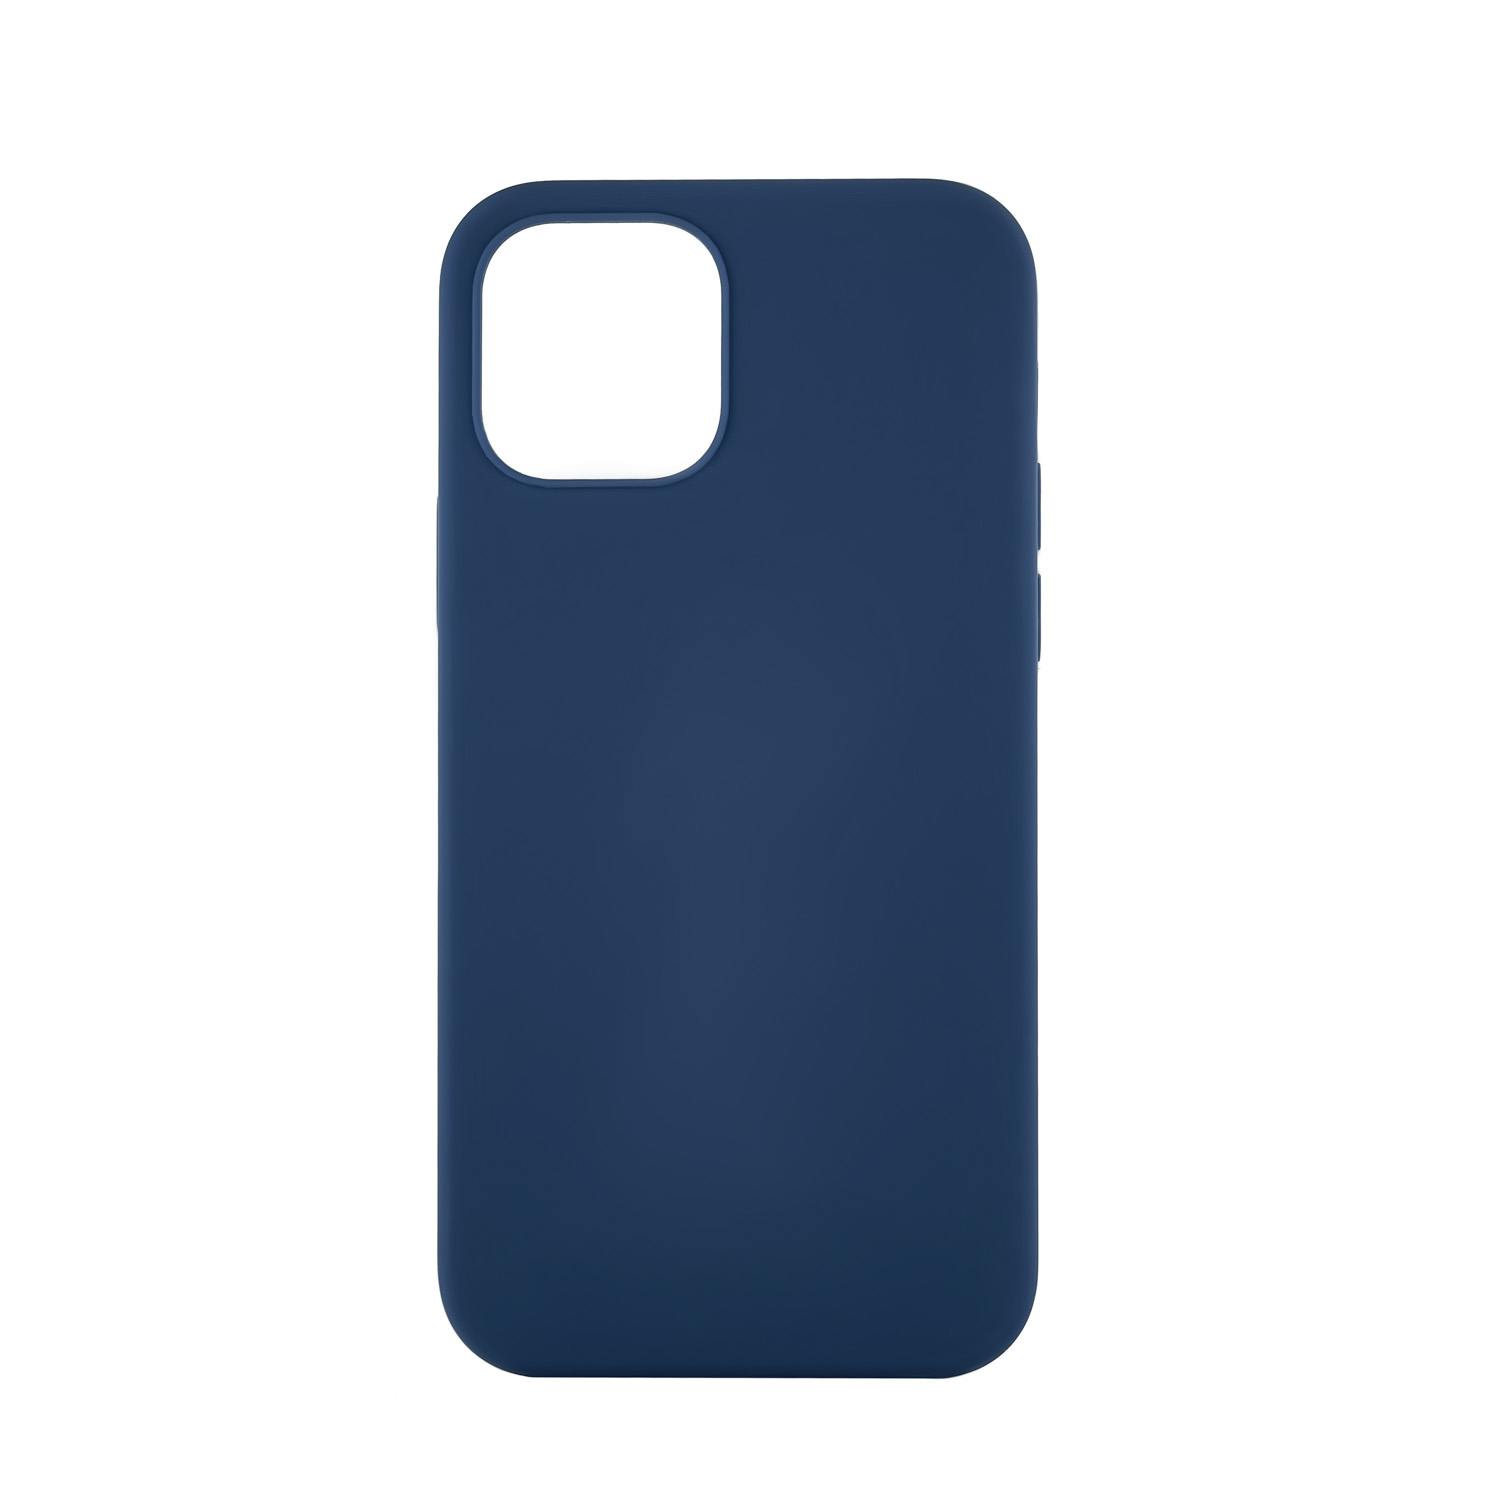 Чехол Ubear Touch Case for iPhone 12 mini (Liquid Silicone) Синий